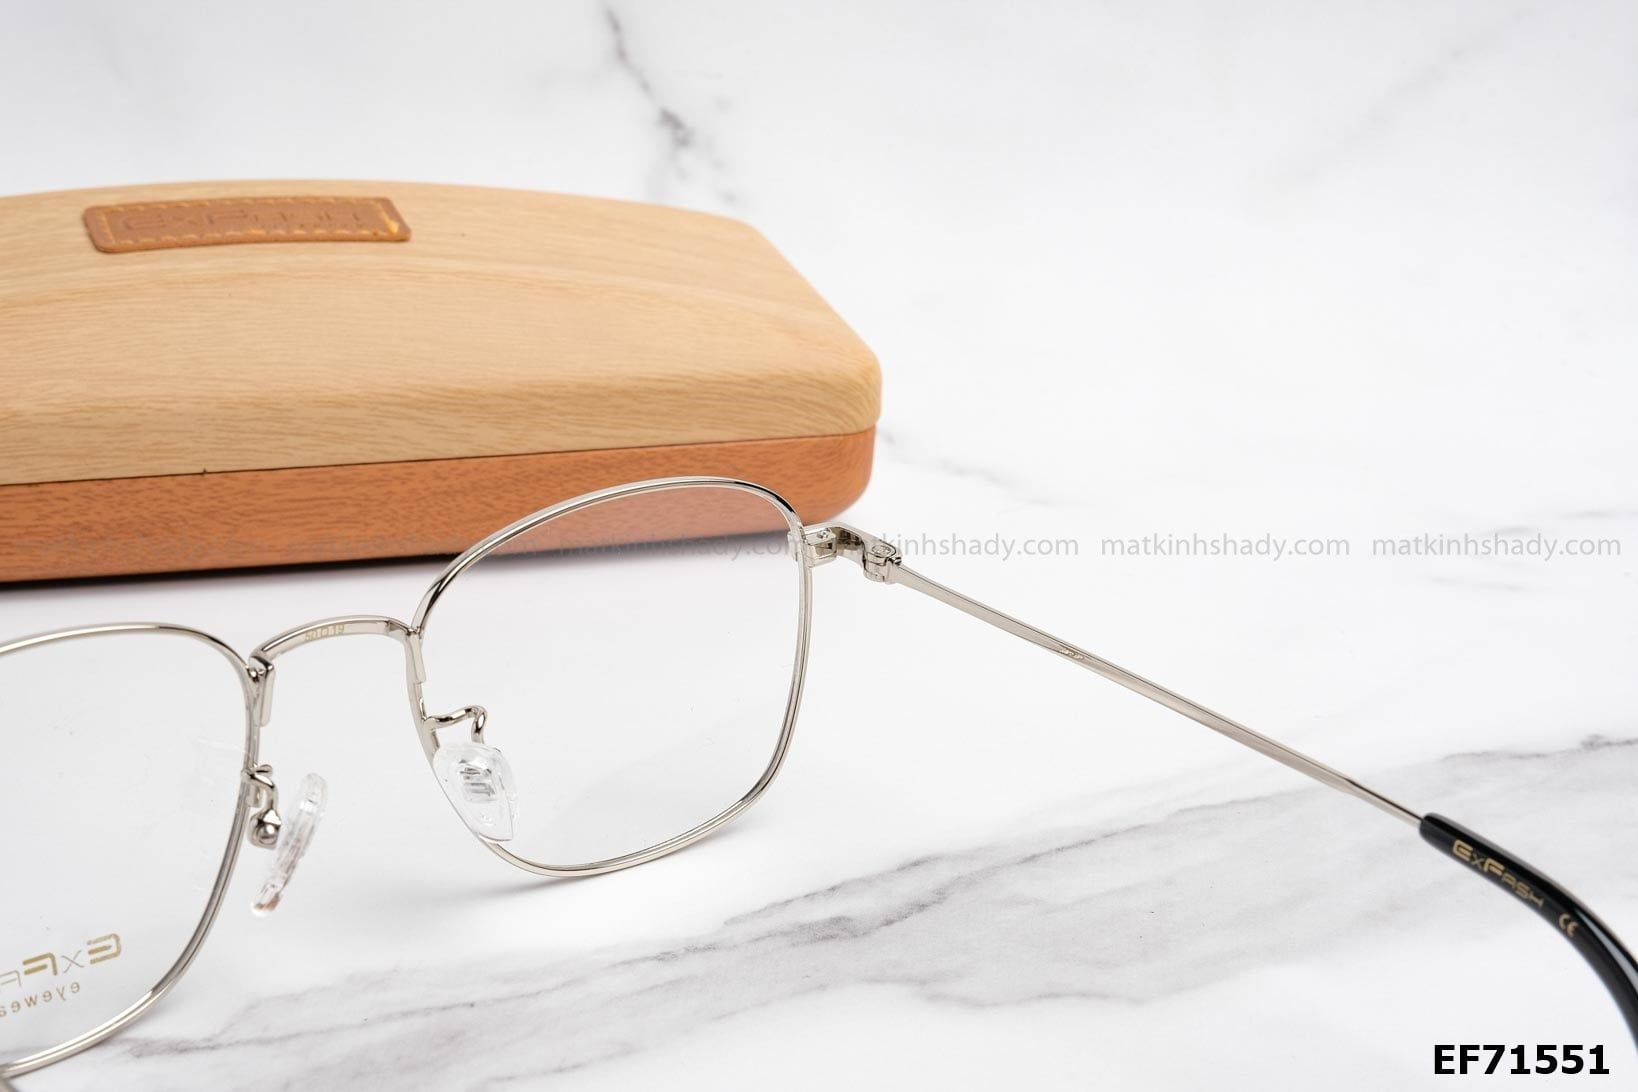  Exfash Eyewear - Glasses - EF71551 